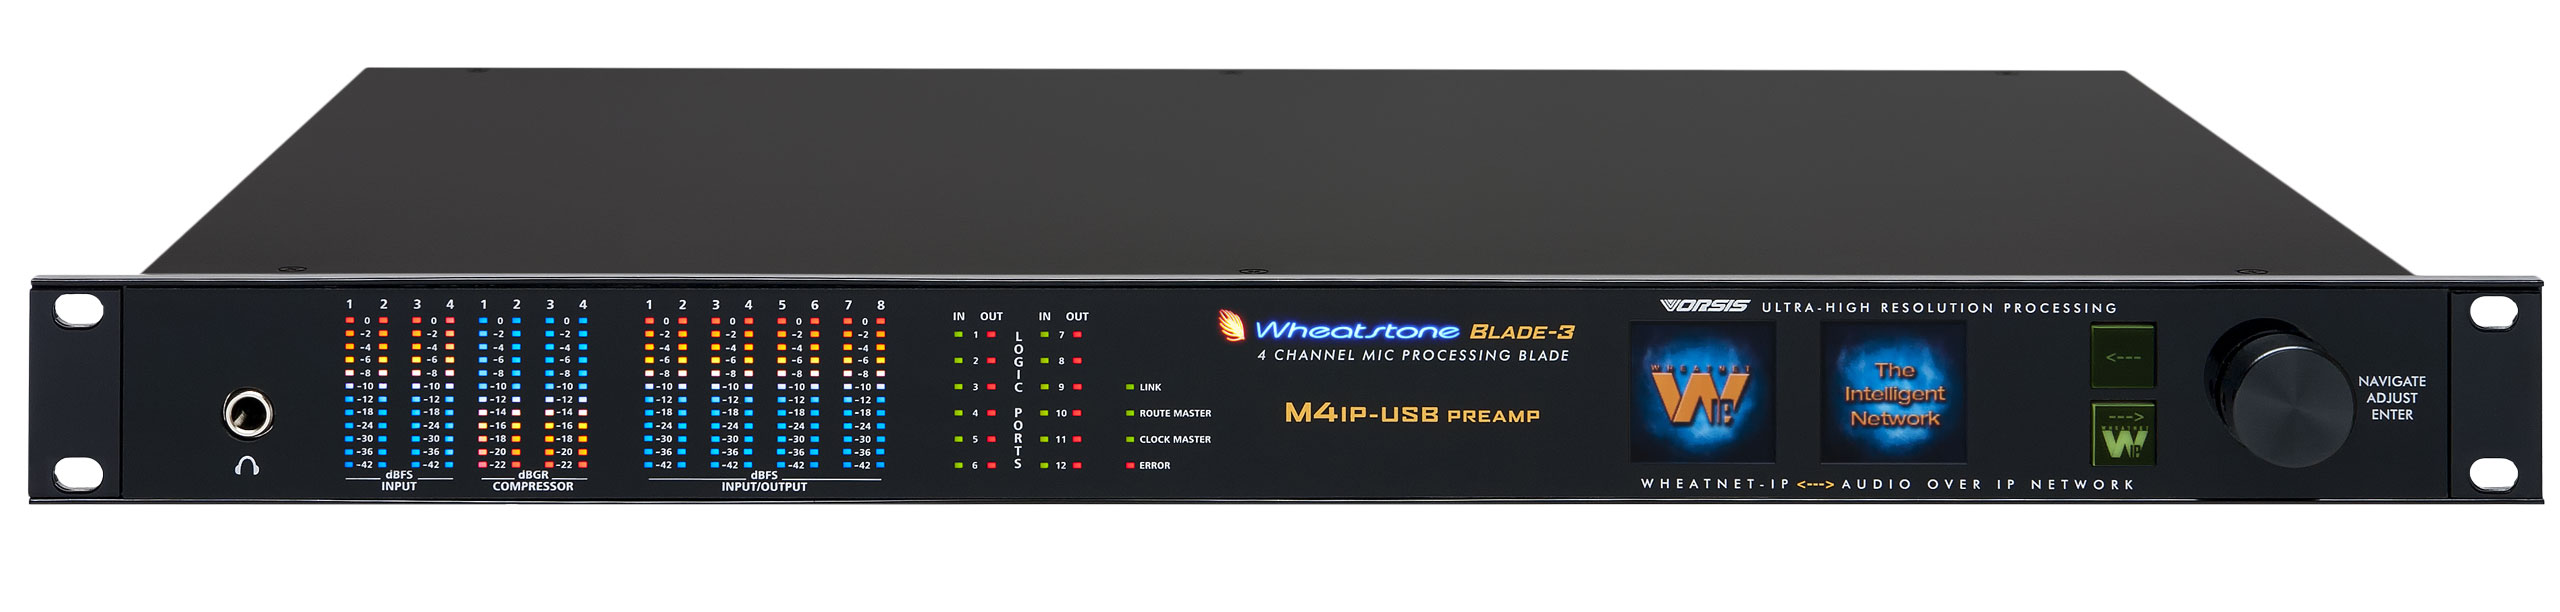 M4-IP USB 4-CHANNEL VOICE/MIC AUDIO PROCESSOR